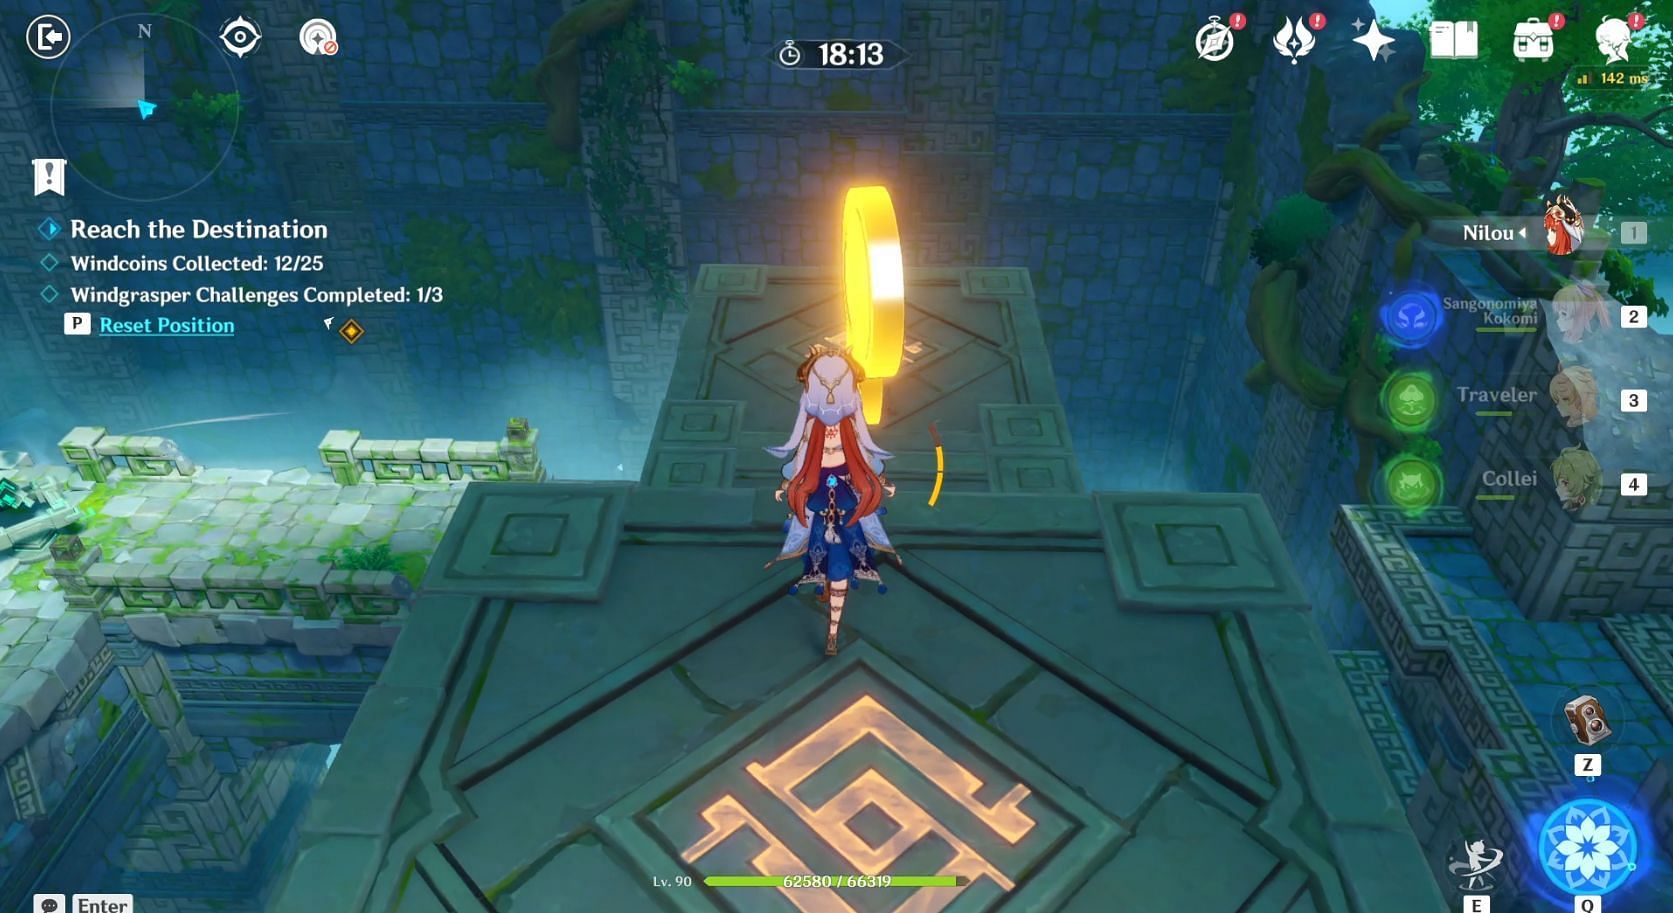 Descending Platform will slowly descend when players step on it (Image via HoYoverse)